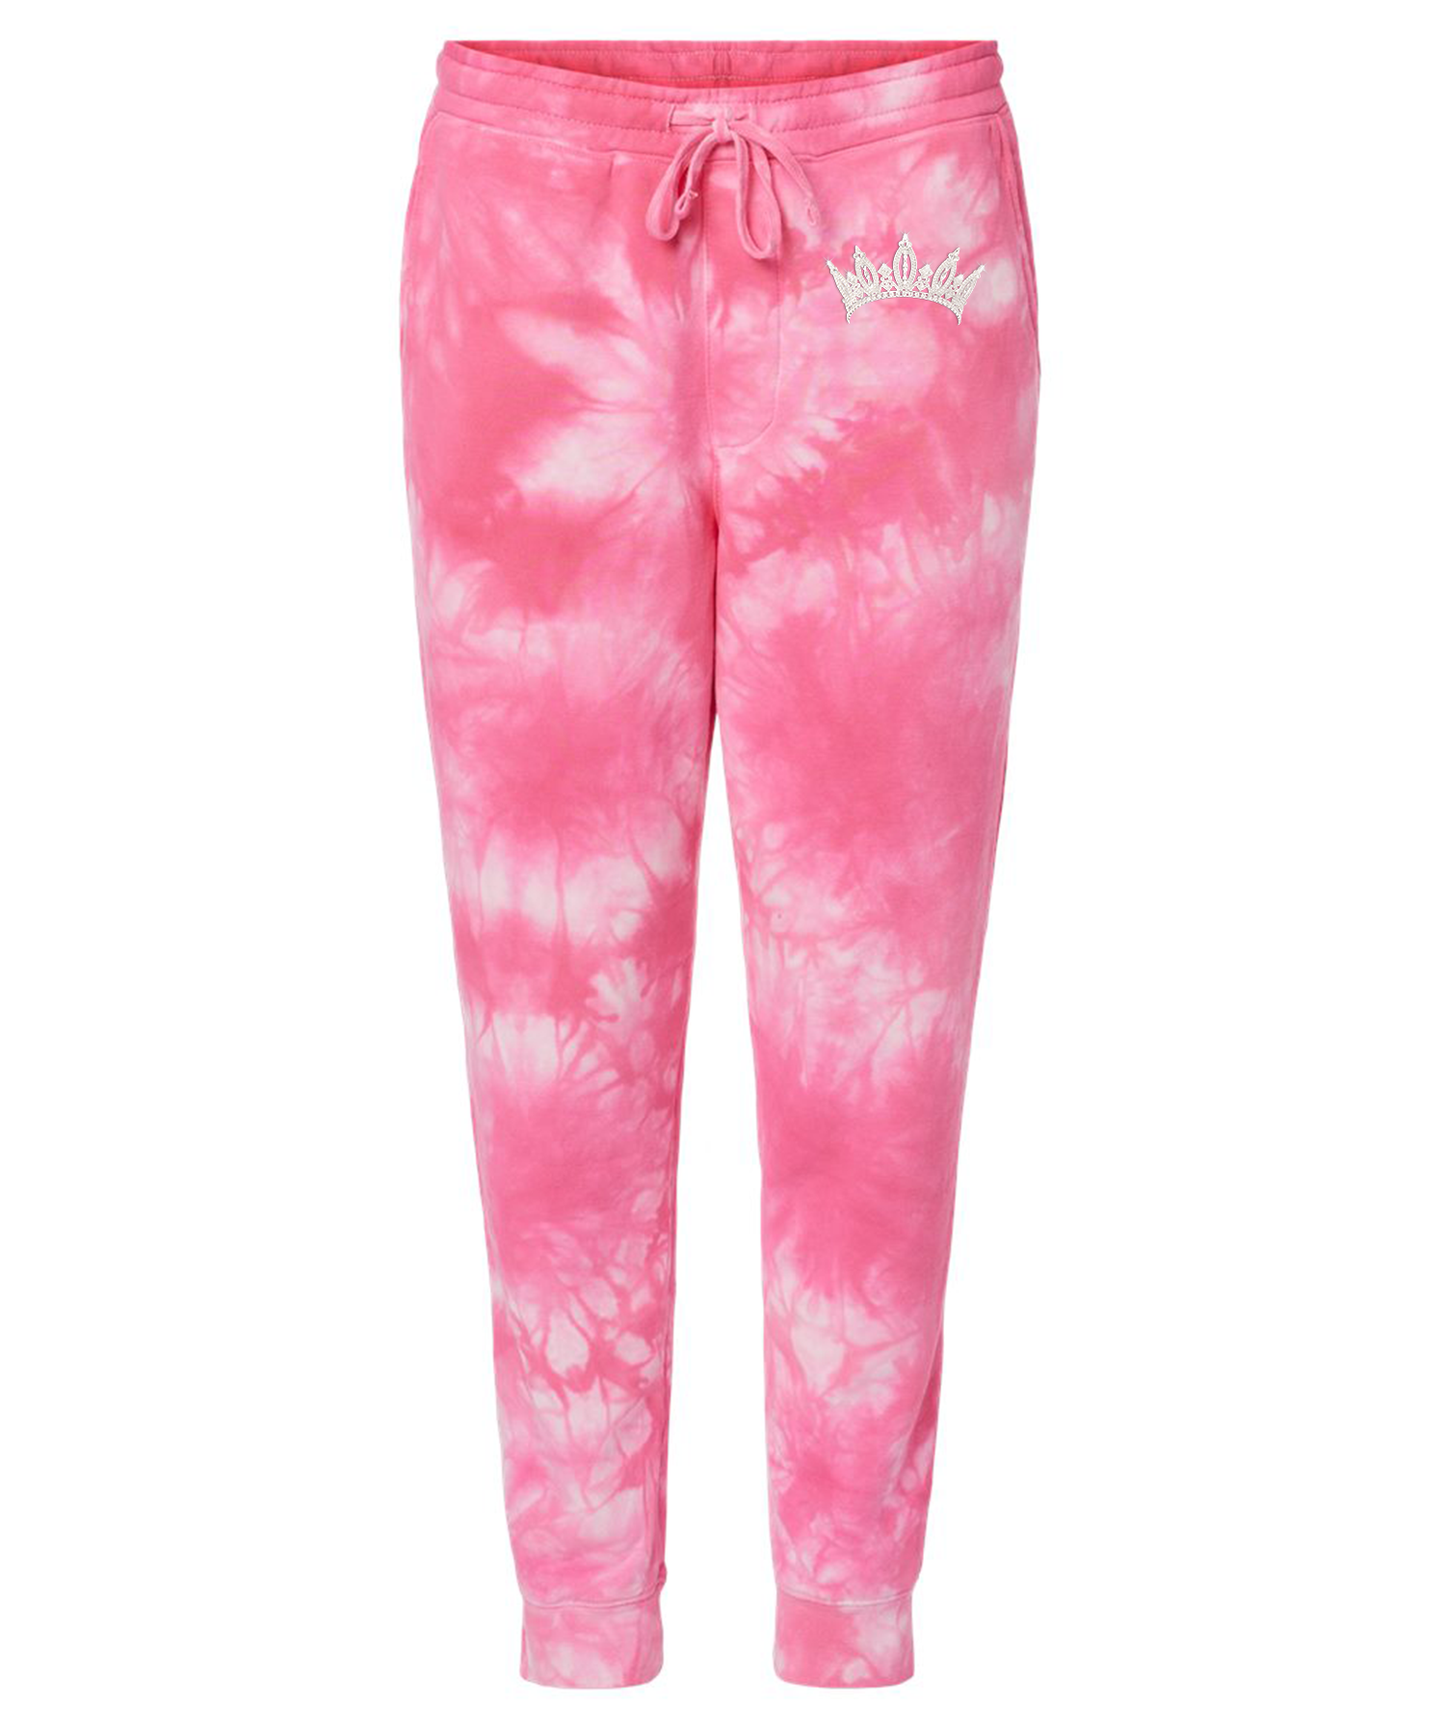 USOA Pink Tie-Dye Sweatpants